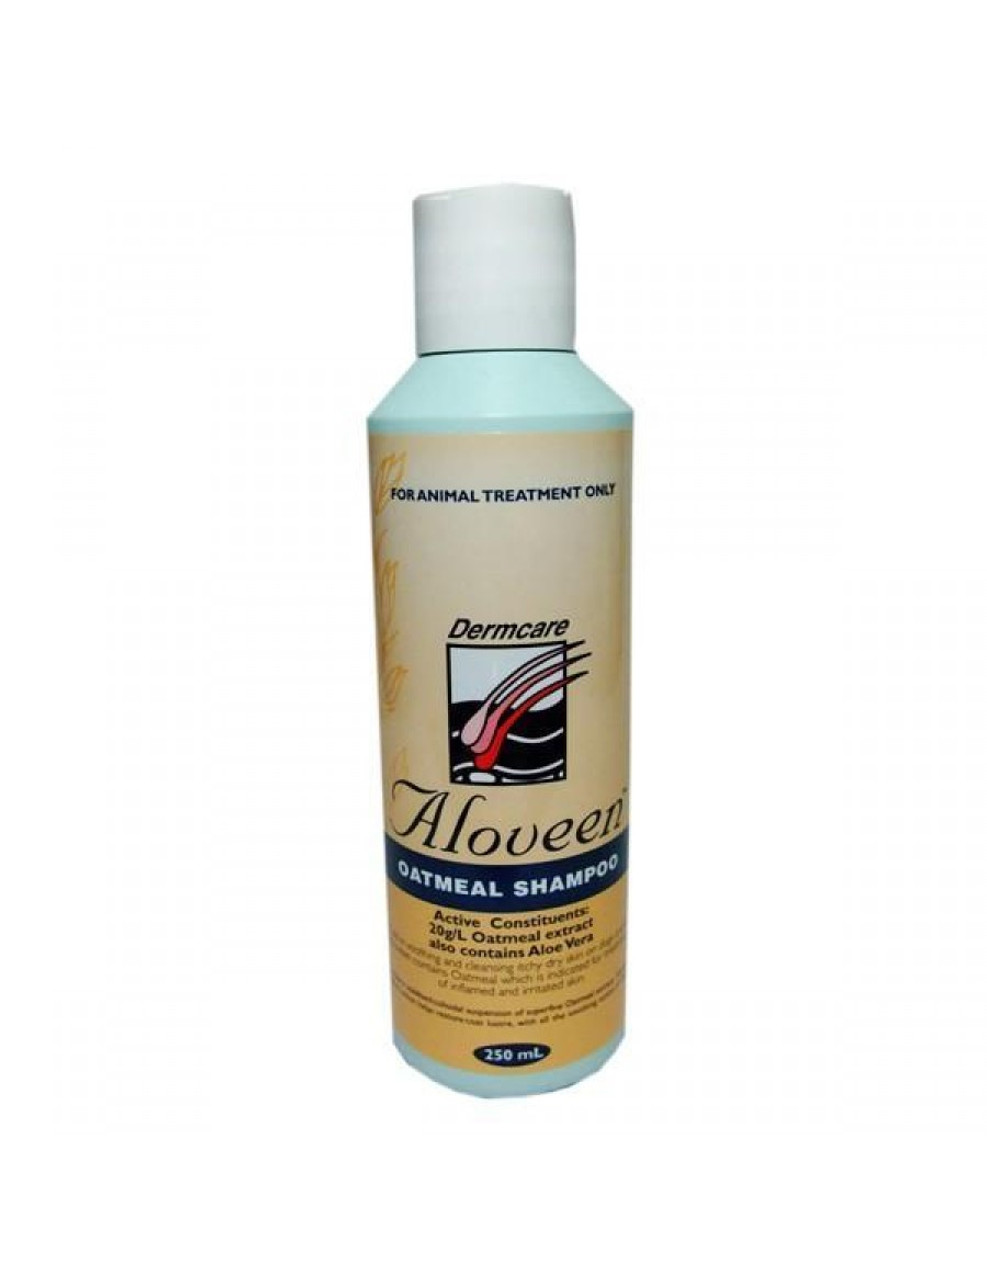 Natural Shampoo - Dermcare